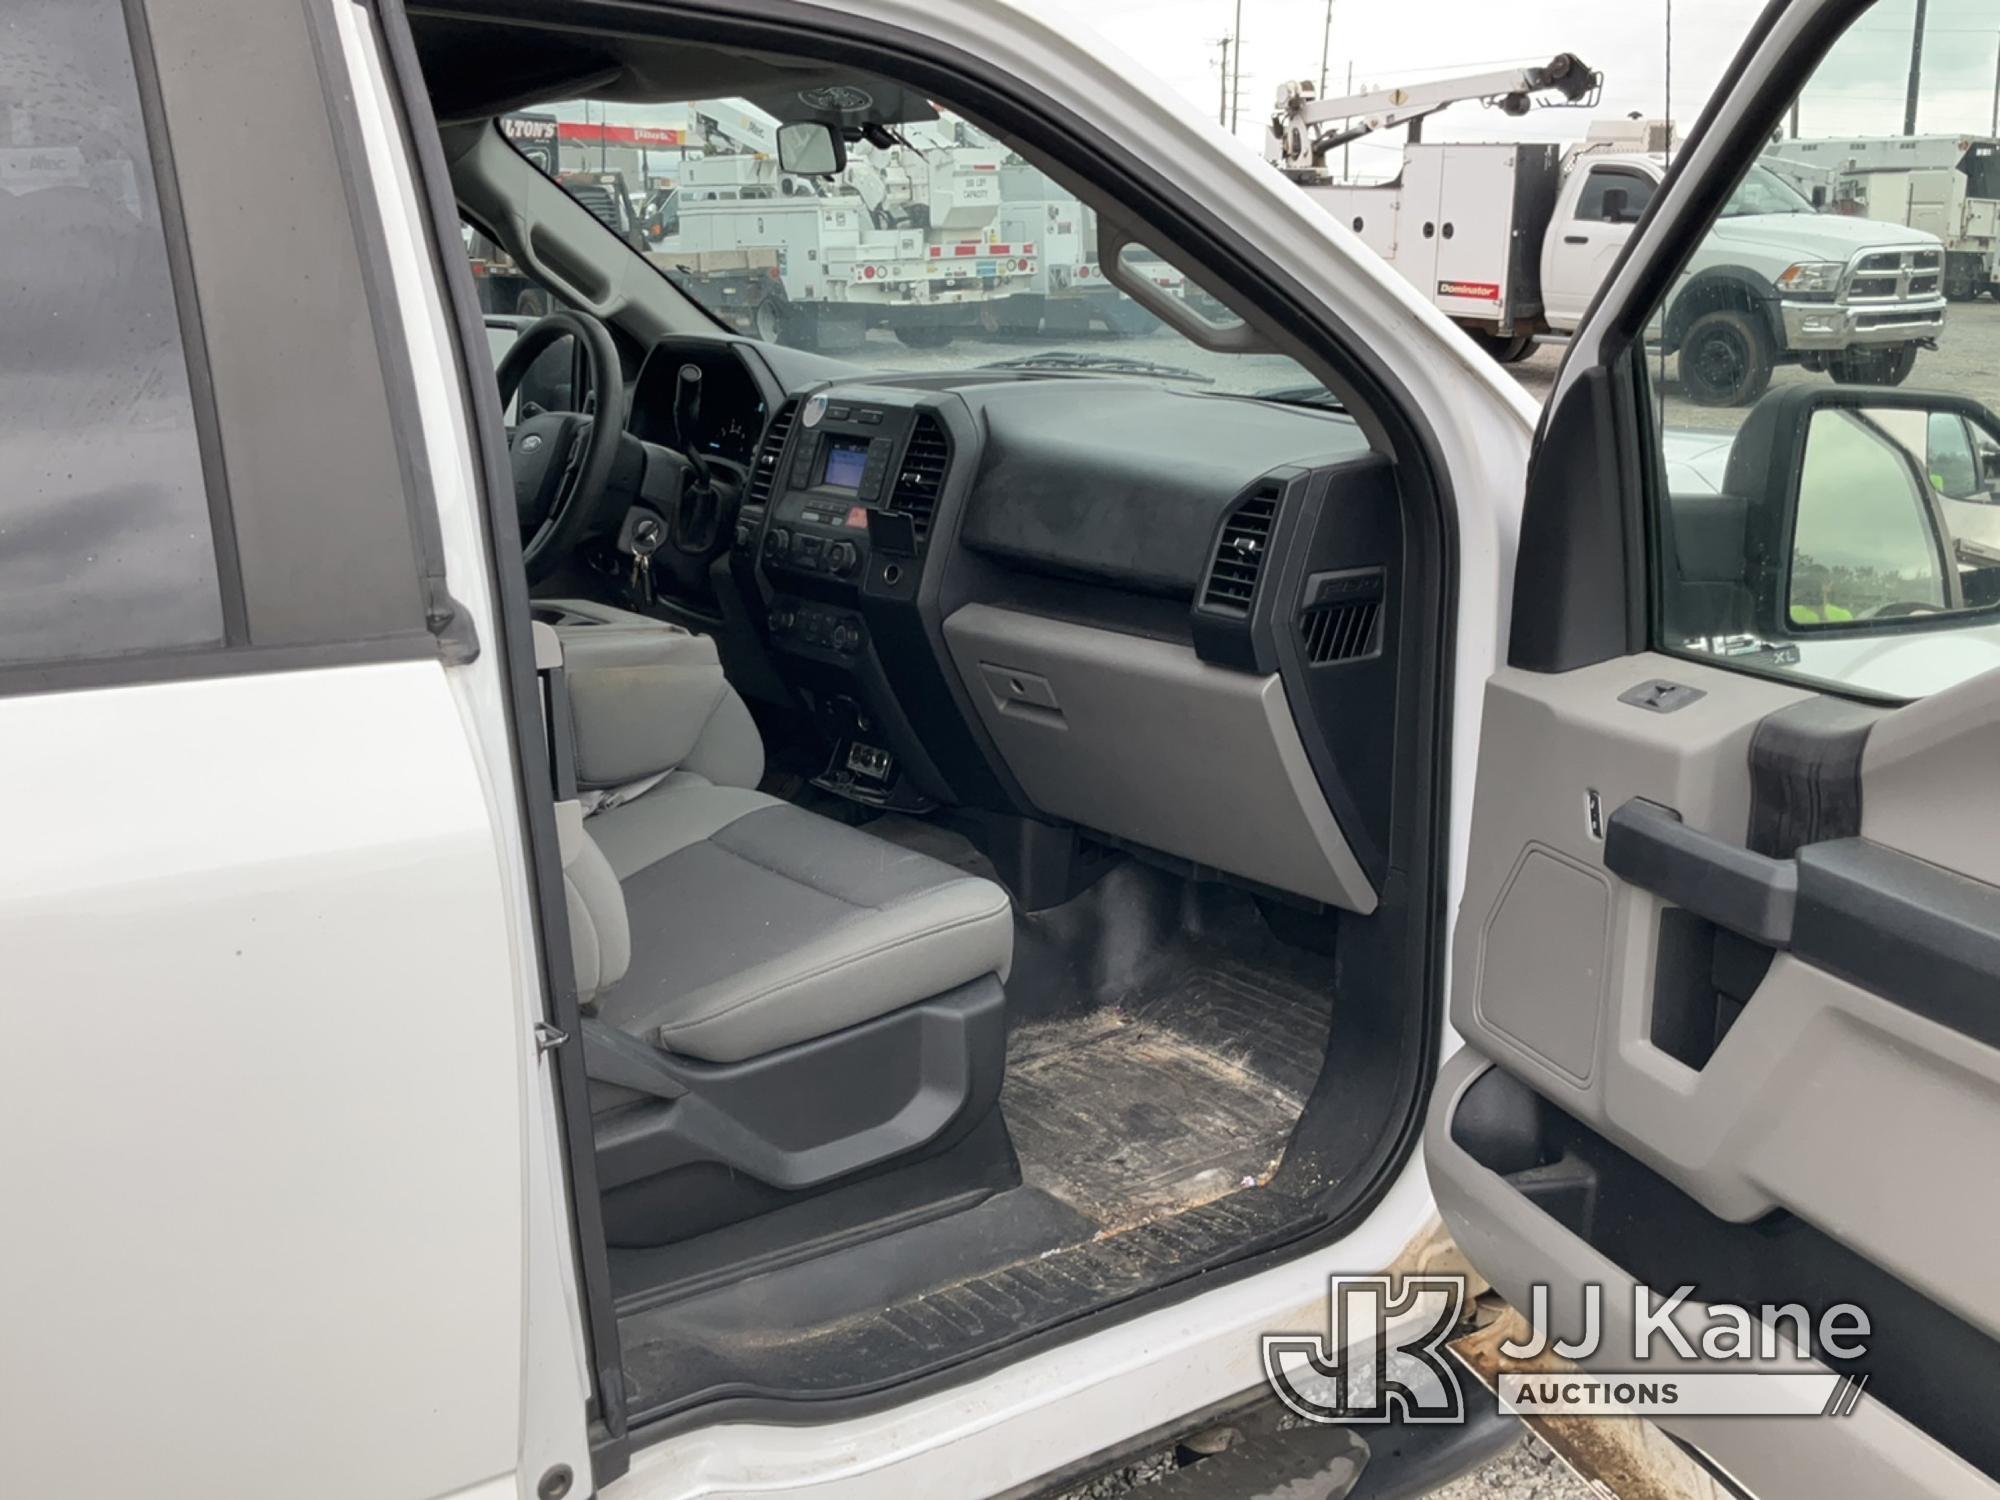 (Villa Rica, GA) 2018 Ford F150 4x4 Extended-Cab Pickup Truck, (GA Power Unit) Runs & Moves) (Check